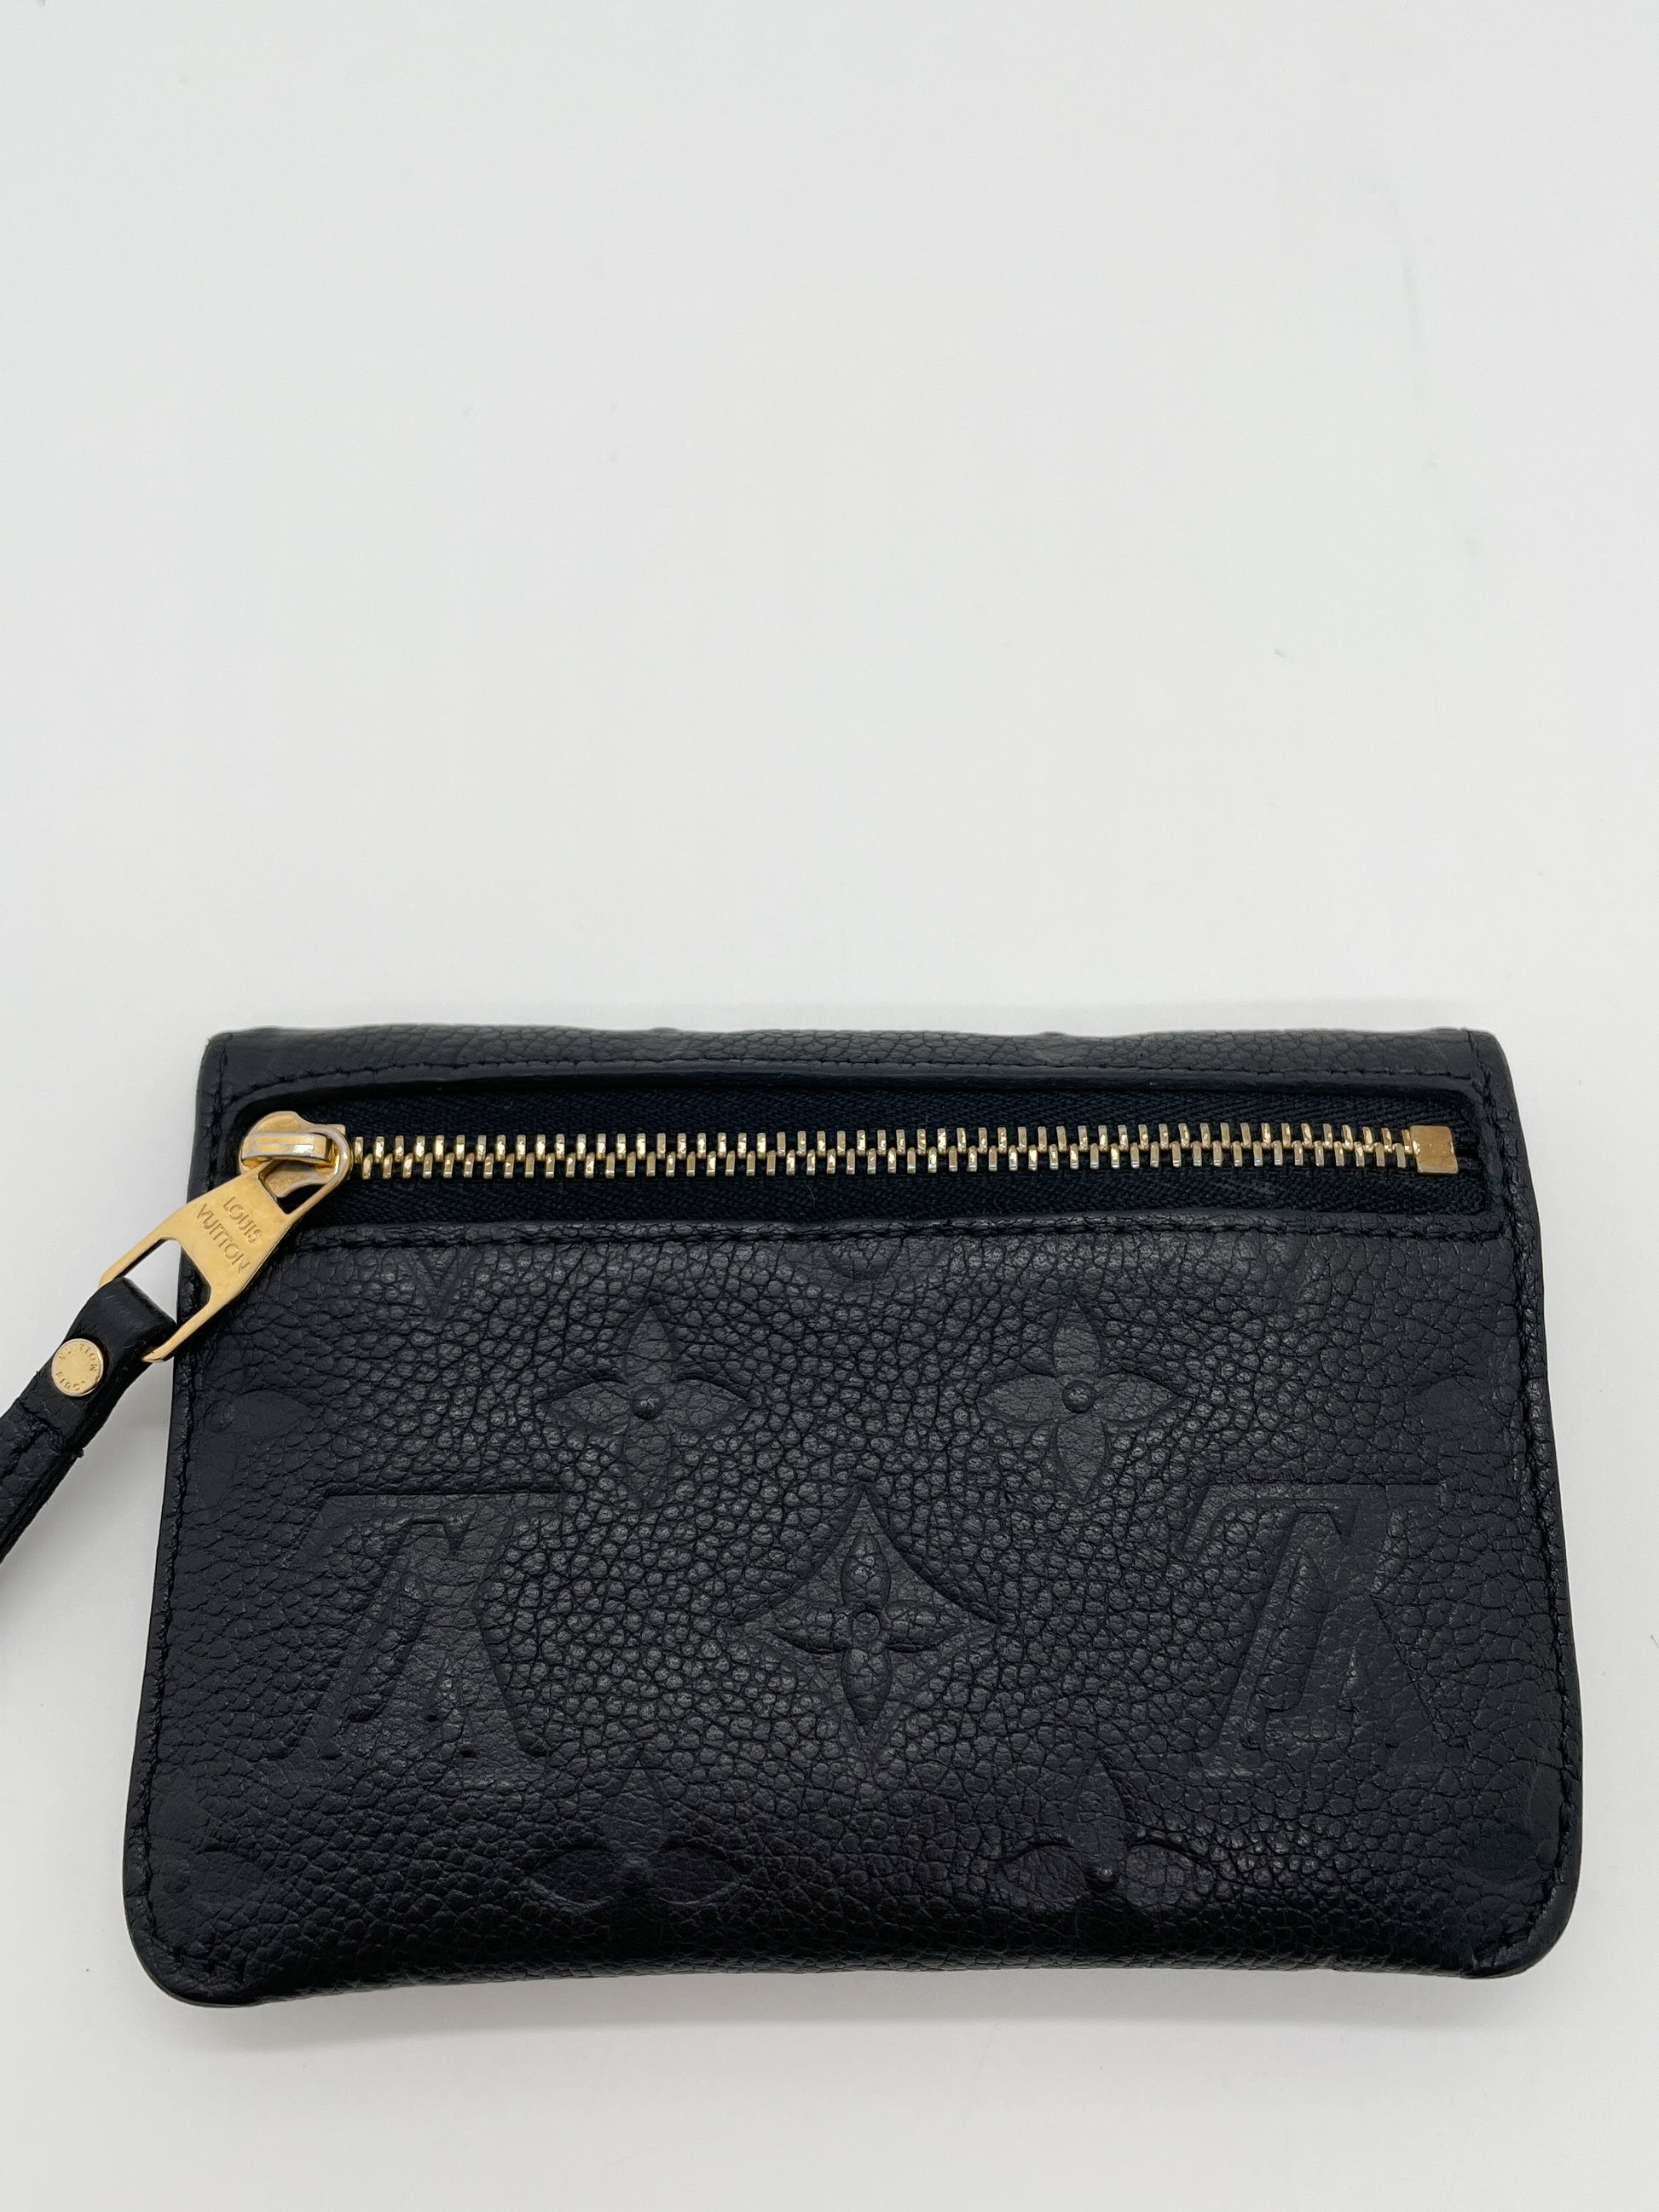 Louis Vuitton Wallet Accessories Coin Card Holder Noir Black Purse